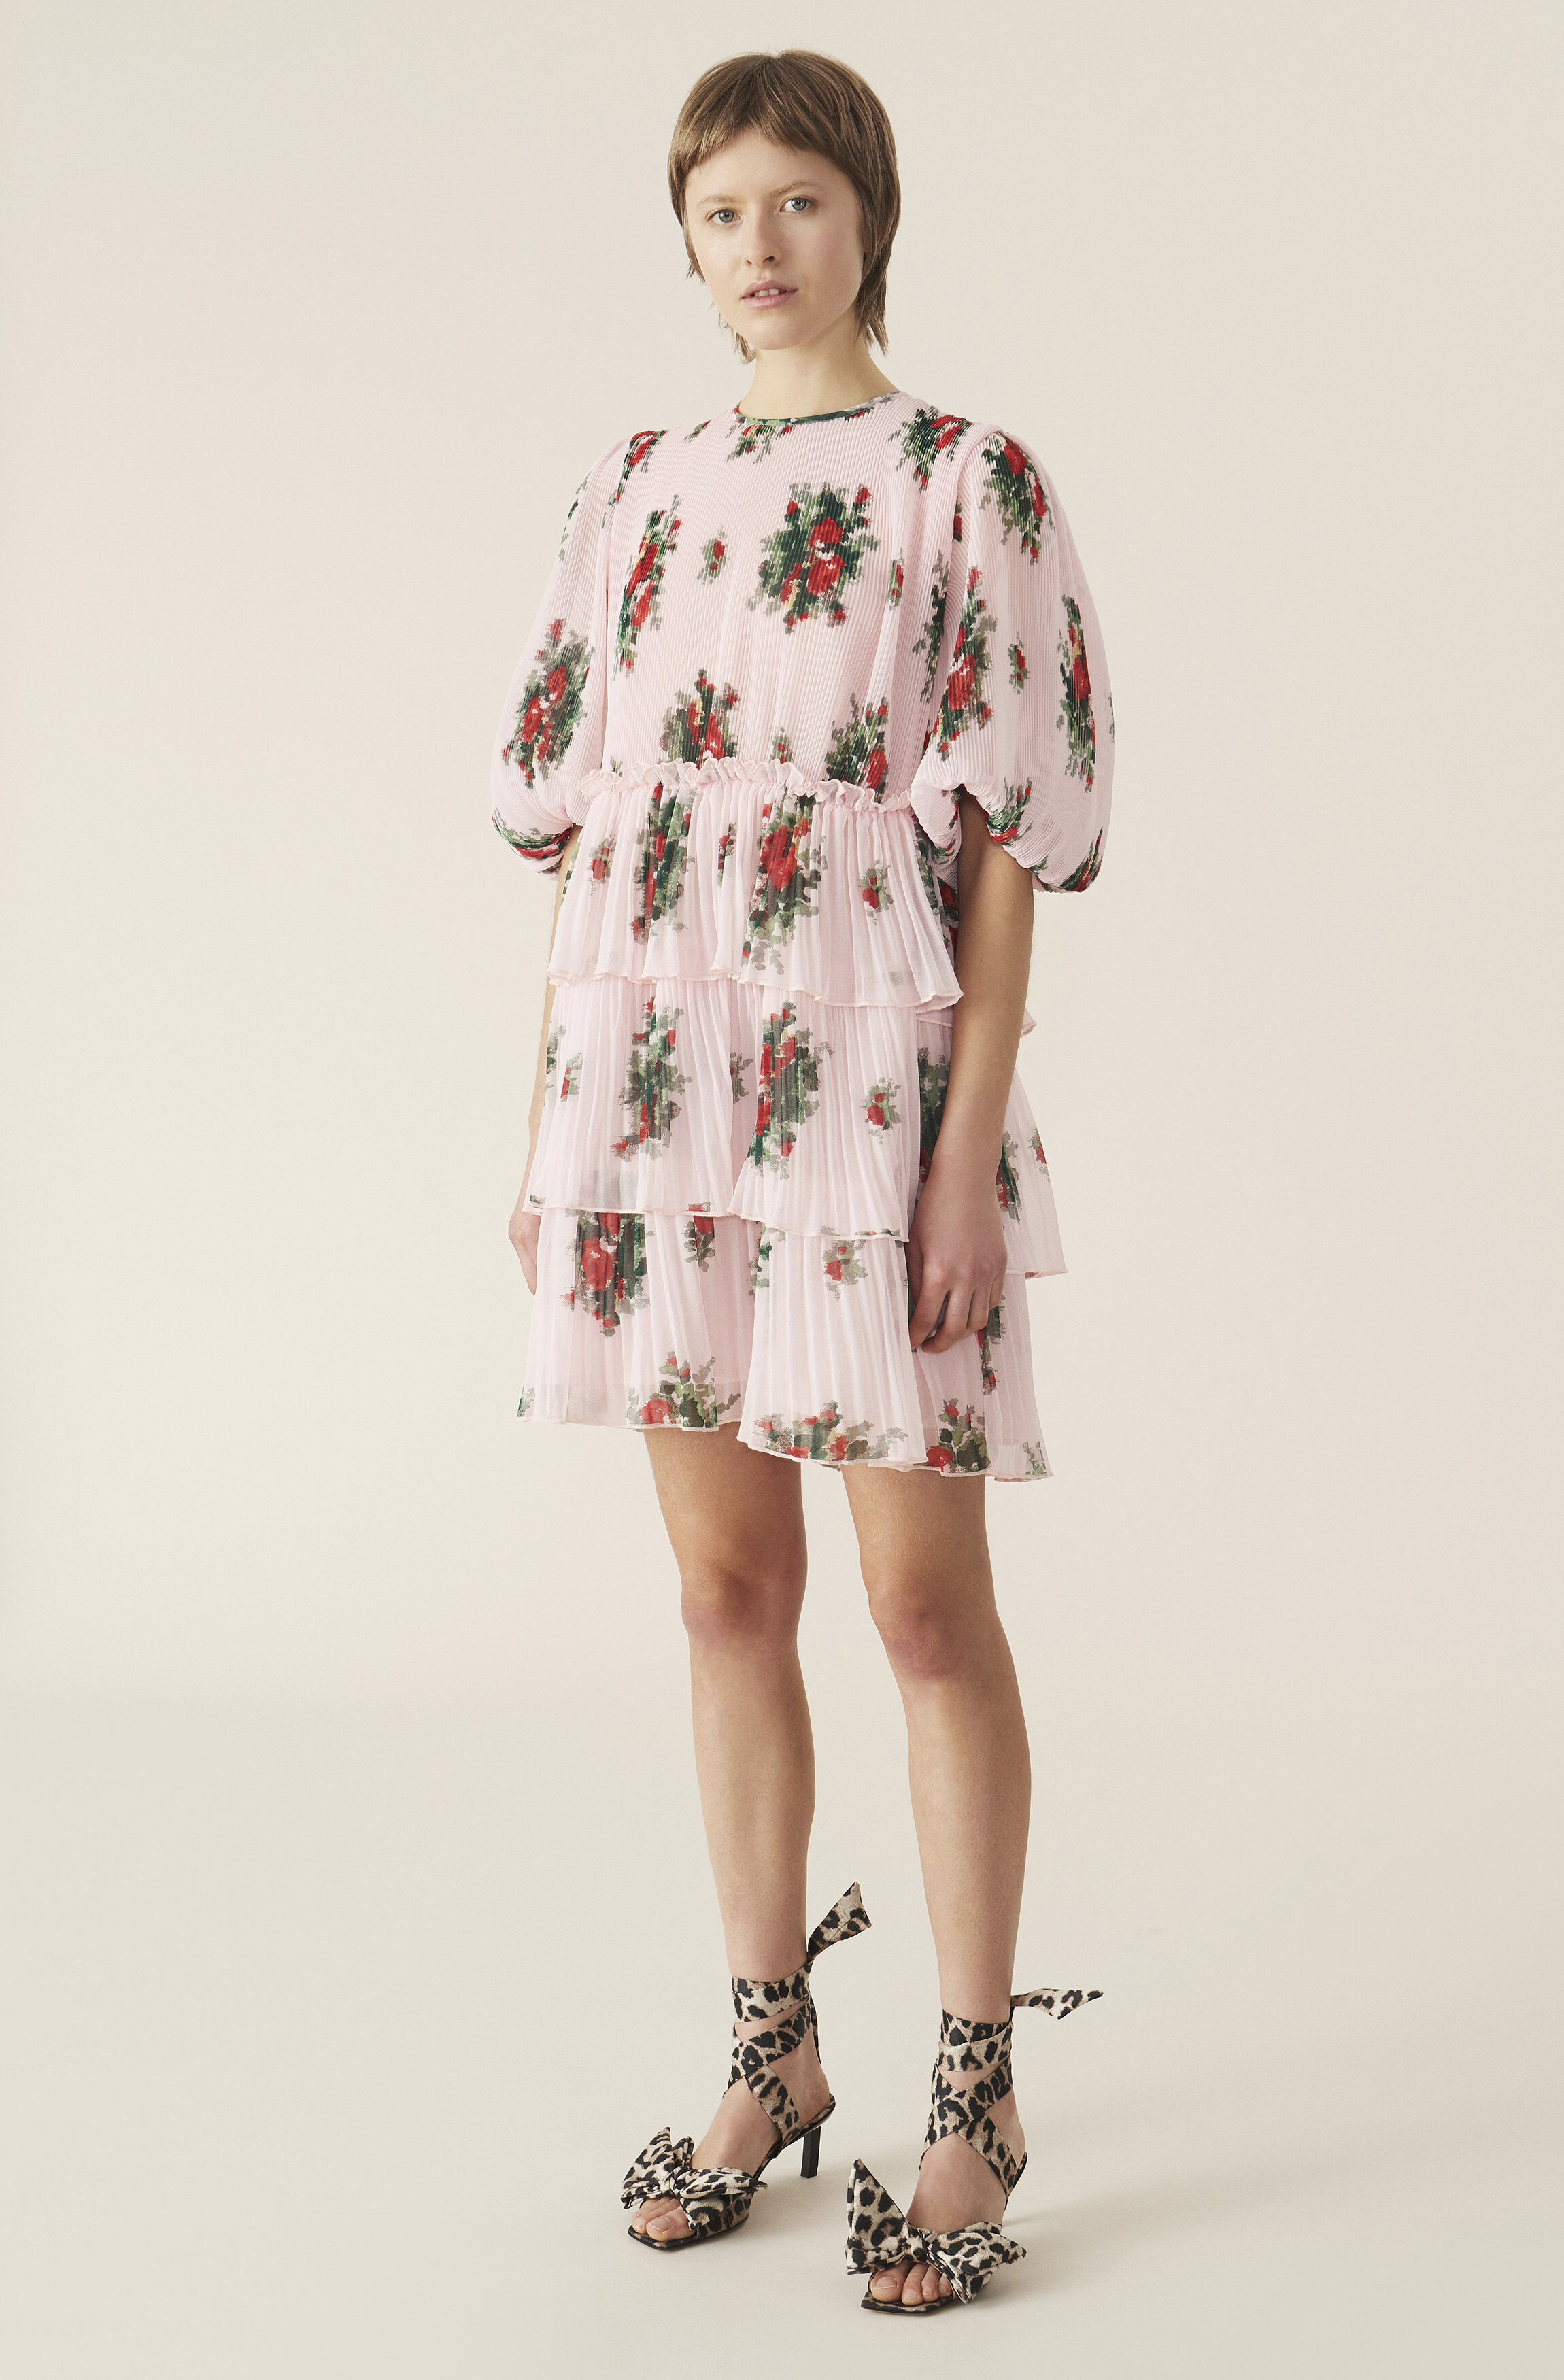 slny floral dress